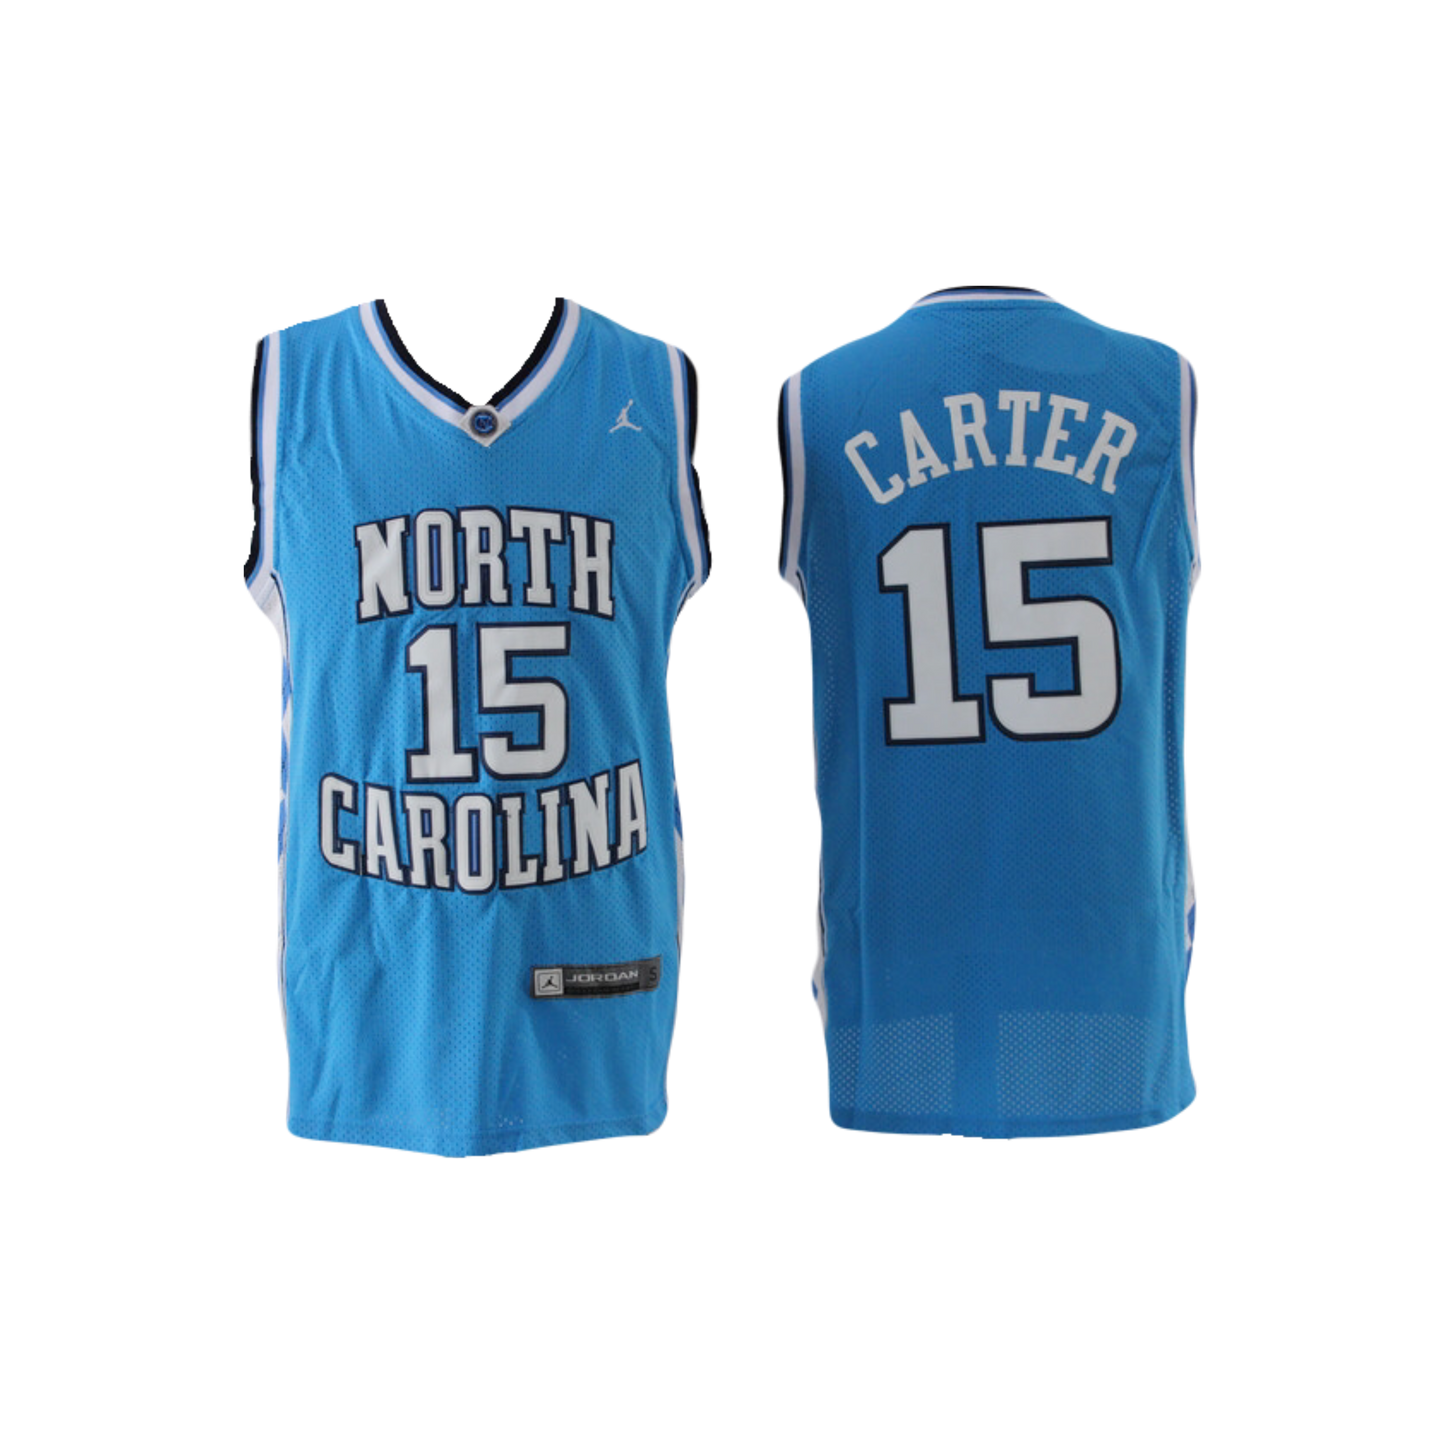 Vince Carter North Carolina 1997 NCAA Campus Legend College Basketball Carolina Blue Jersey